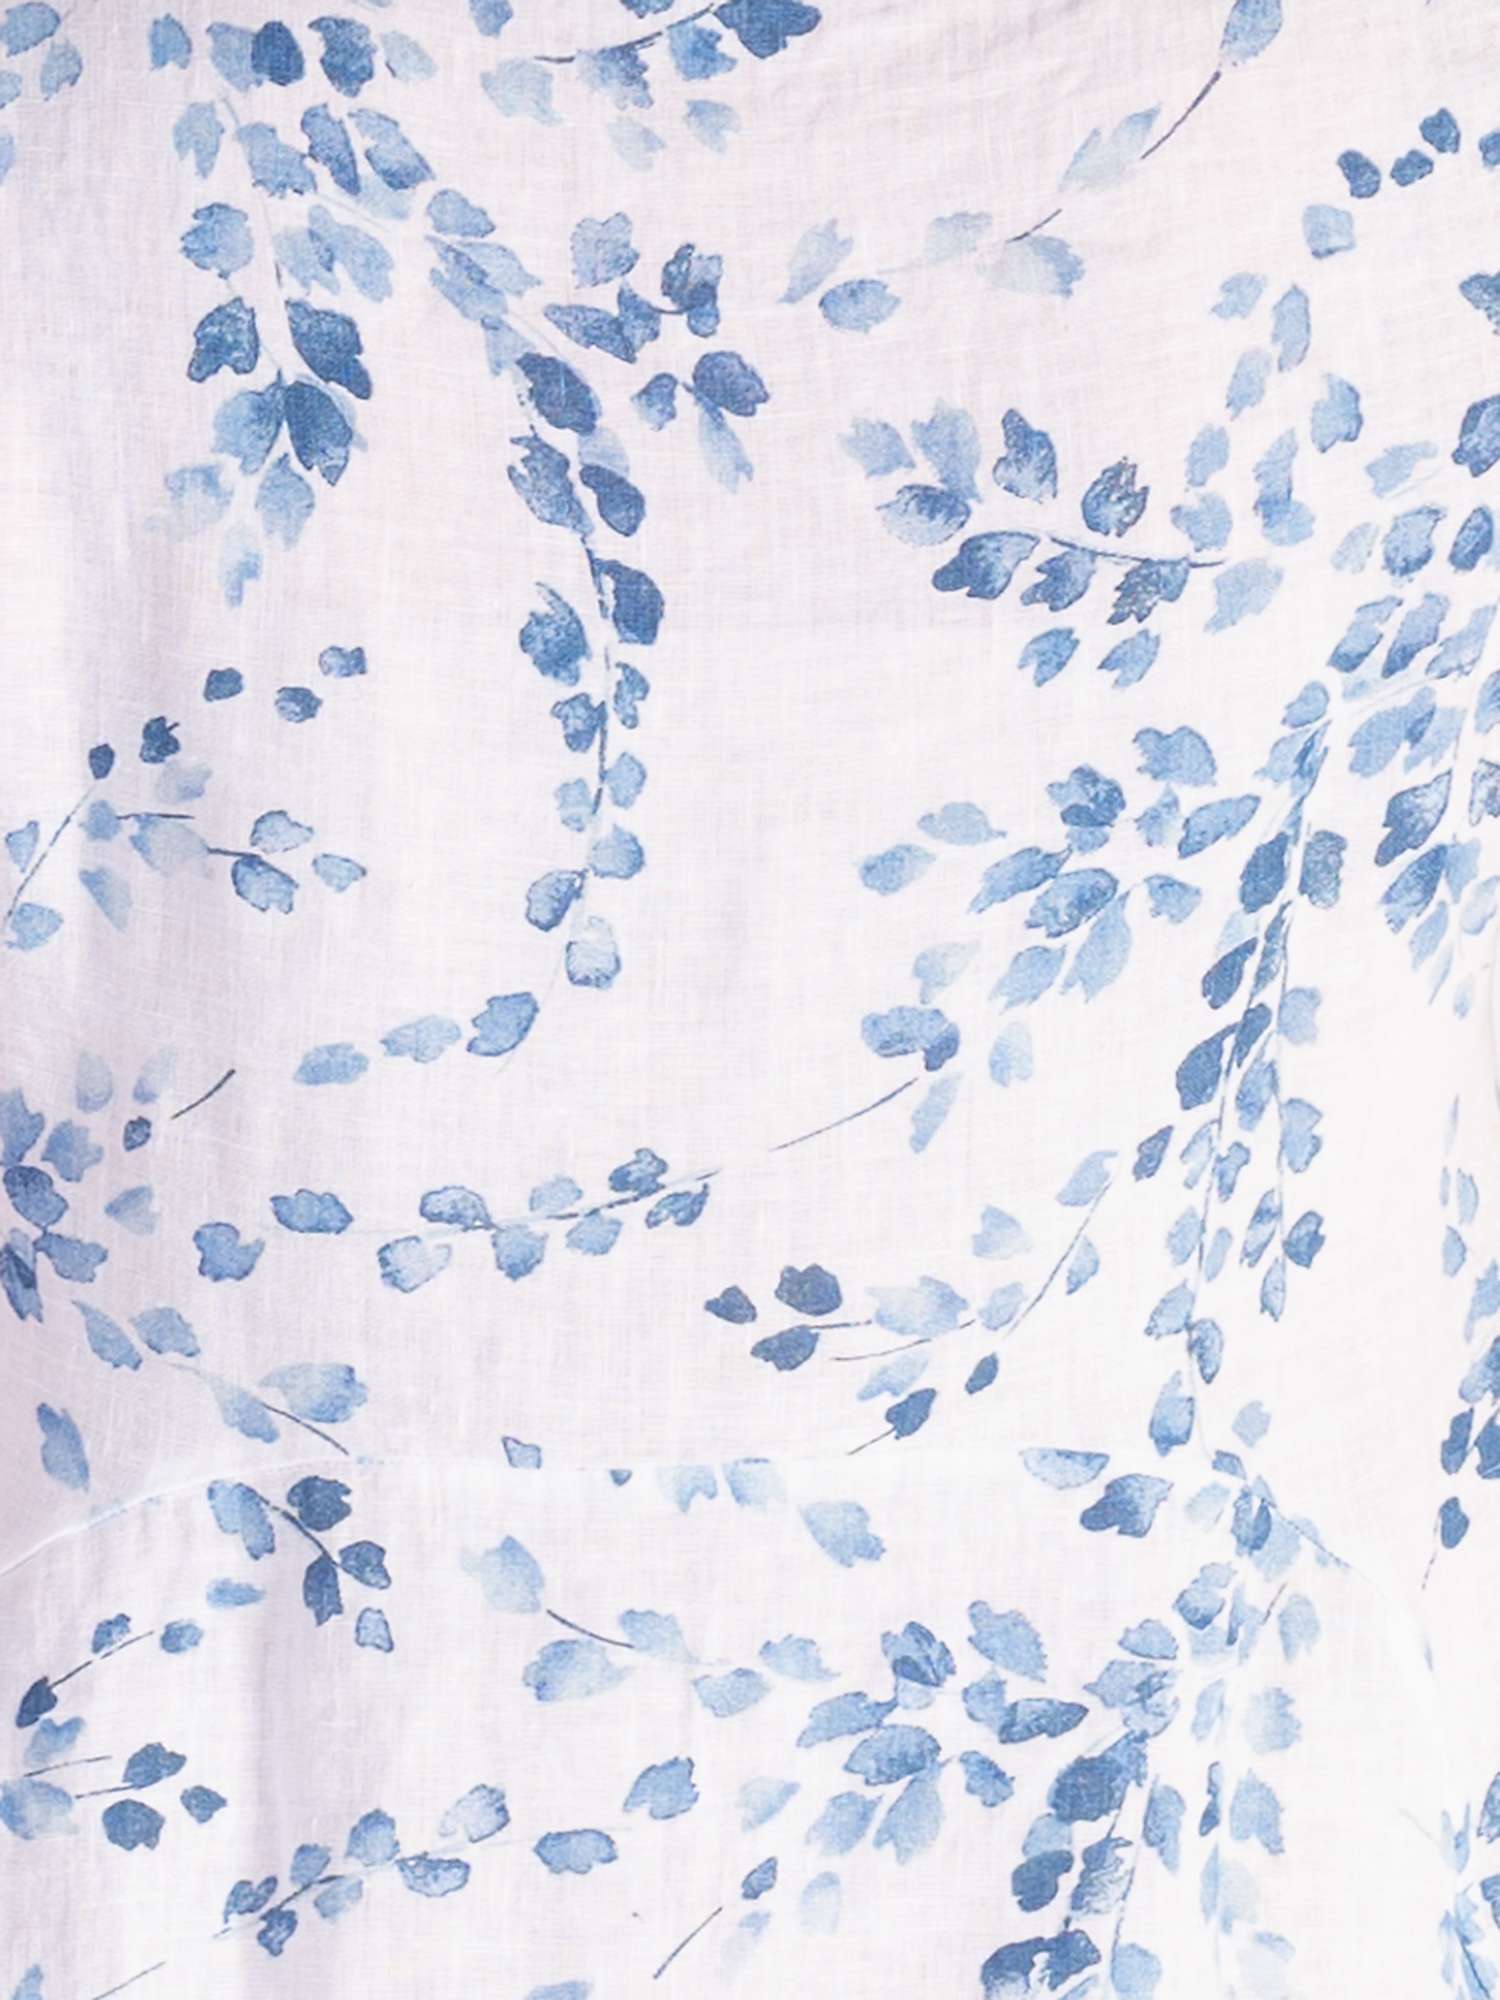 Buy chesca Curve Floral Print Linen Midi Dress, Blue/White Online at johnlewis.com